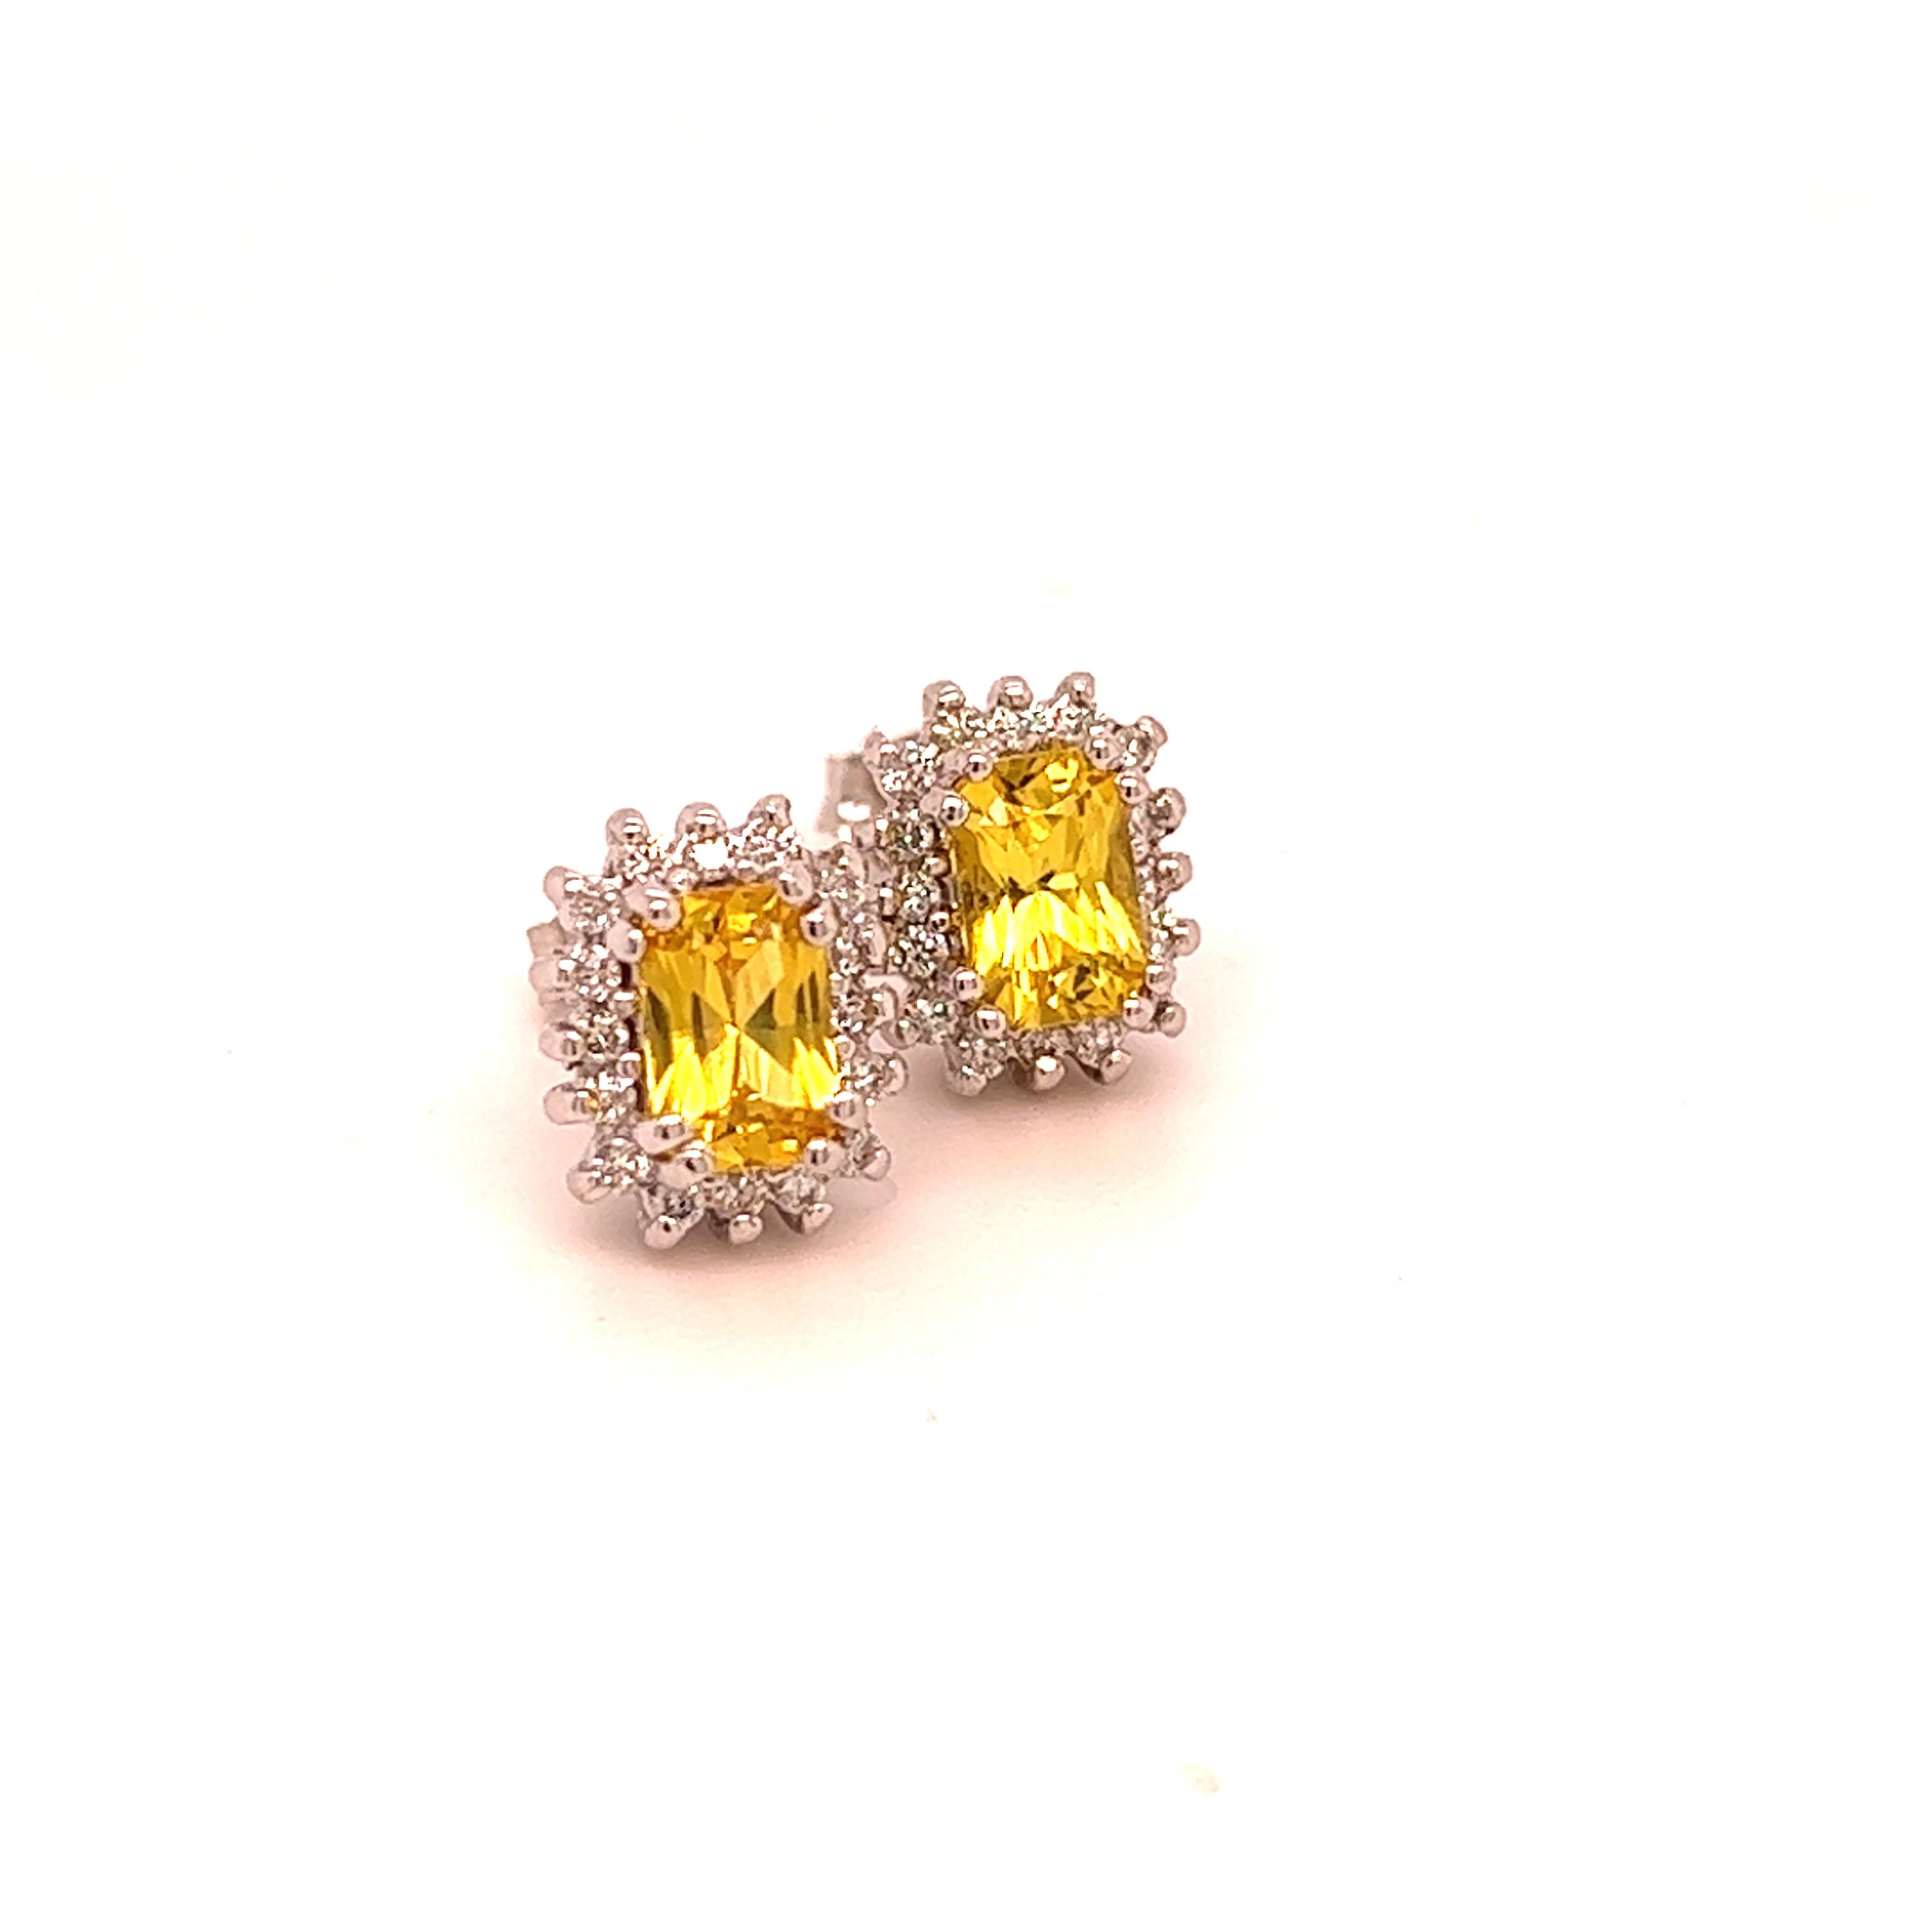 Natural Sapphire Diamond Stud Earrings 14k W Gold 1.71 TCW Certified For Sale 3